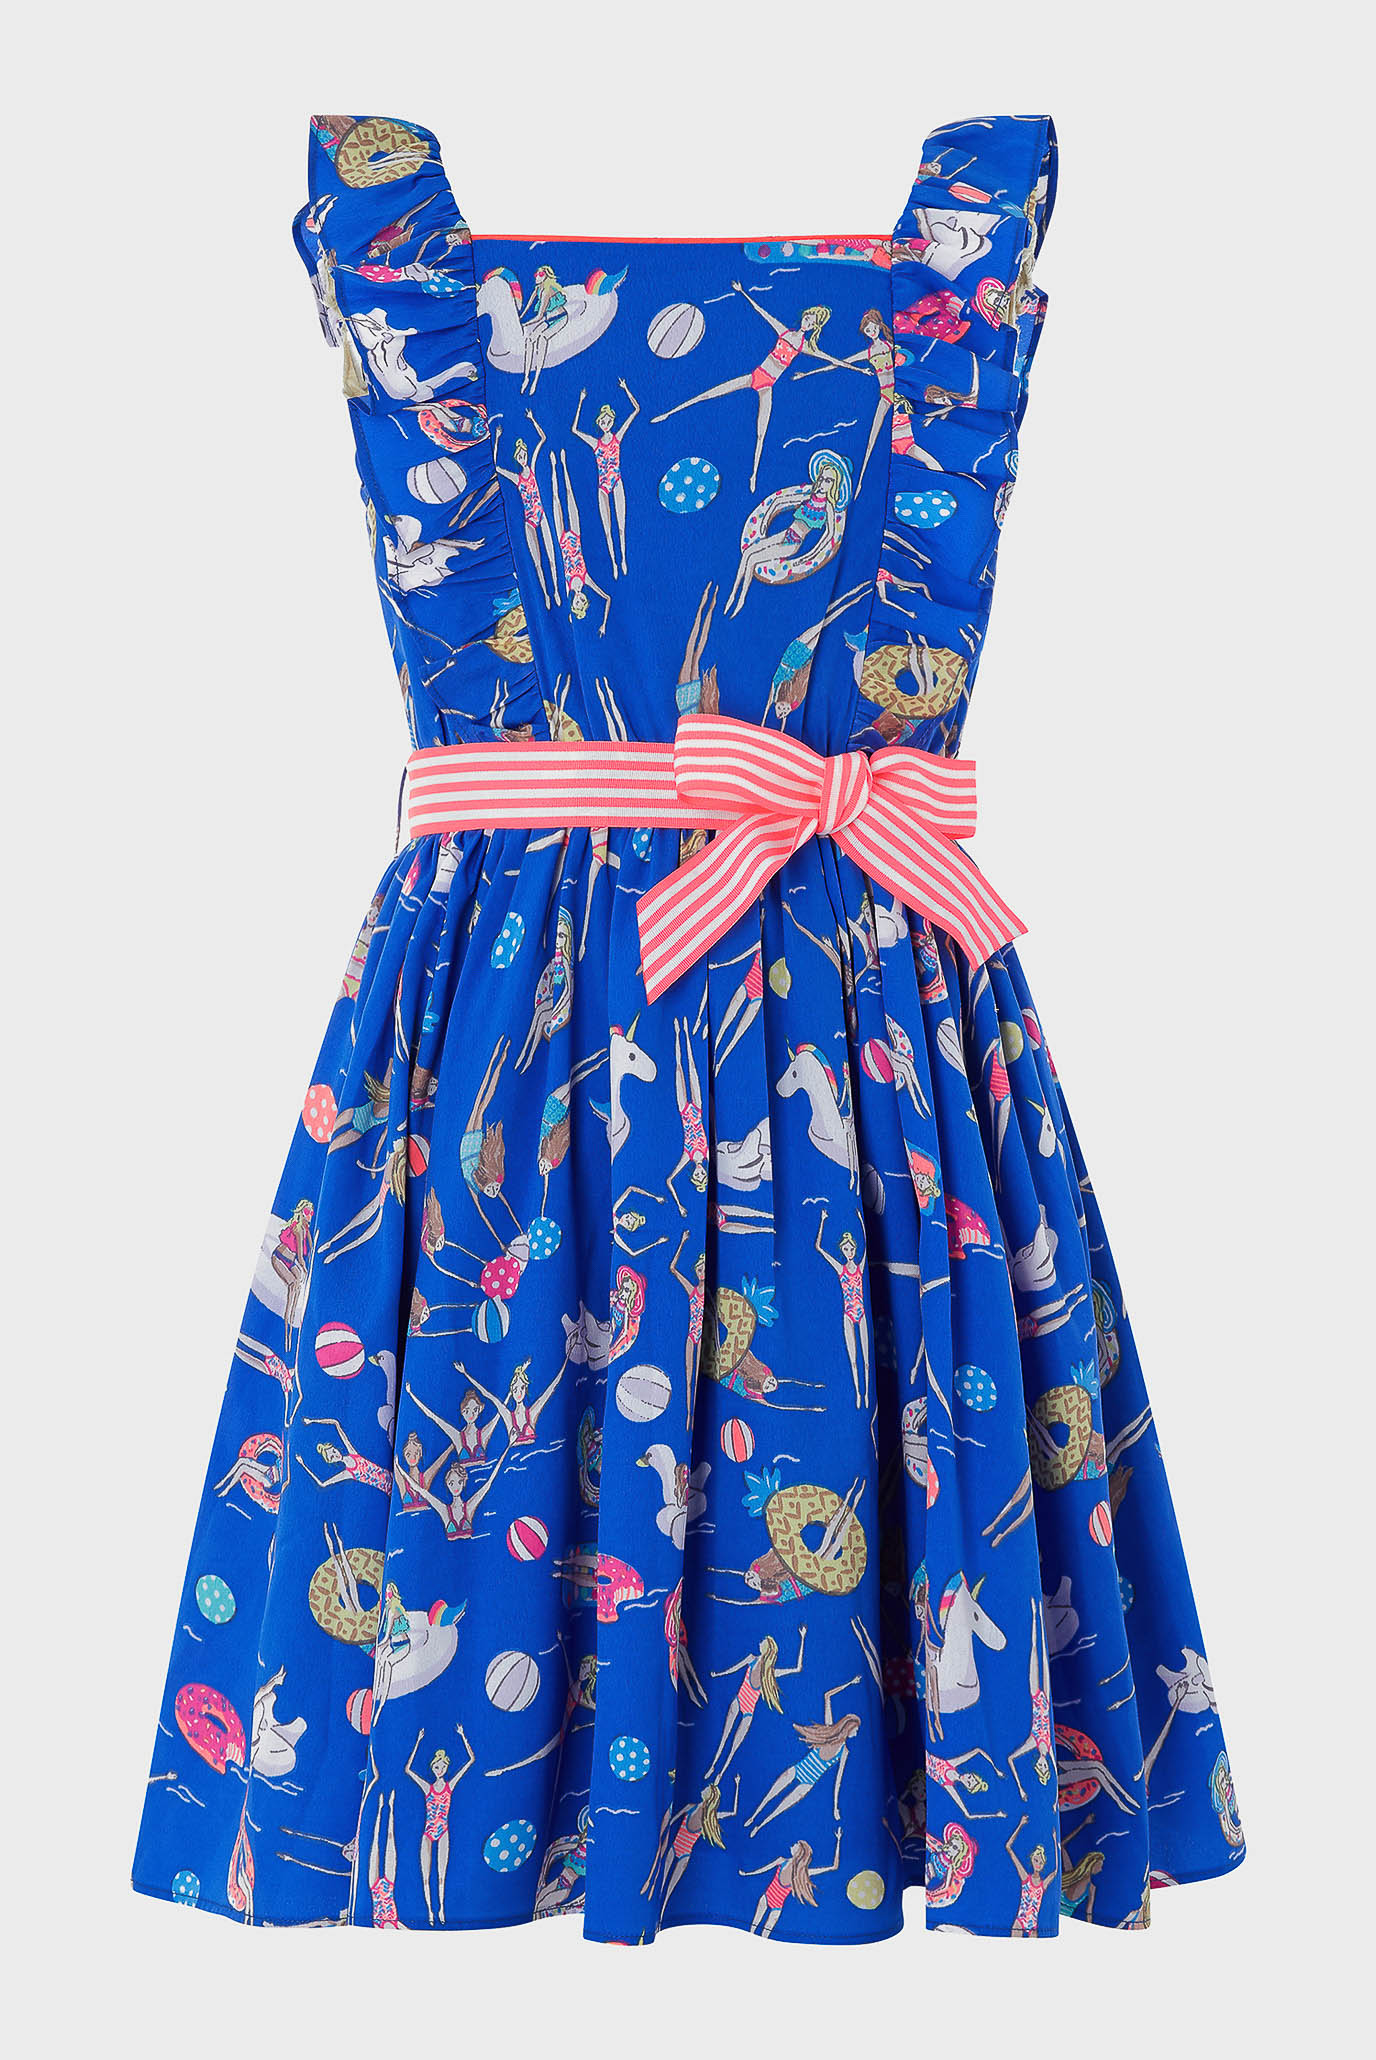 Дитяча синя сукня Waverly 1